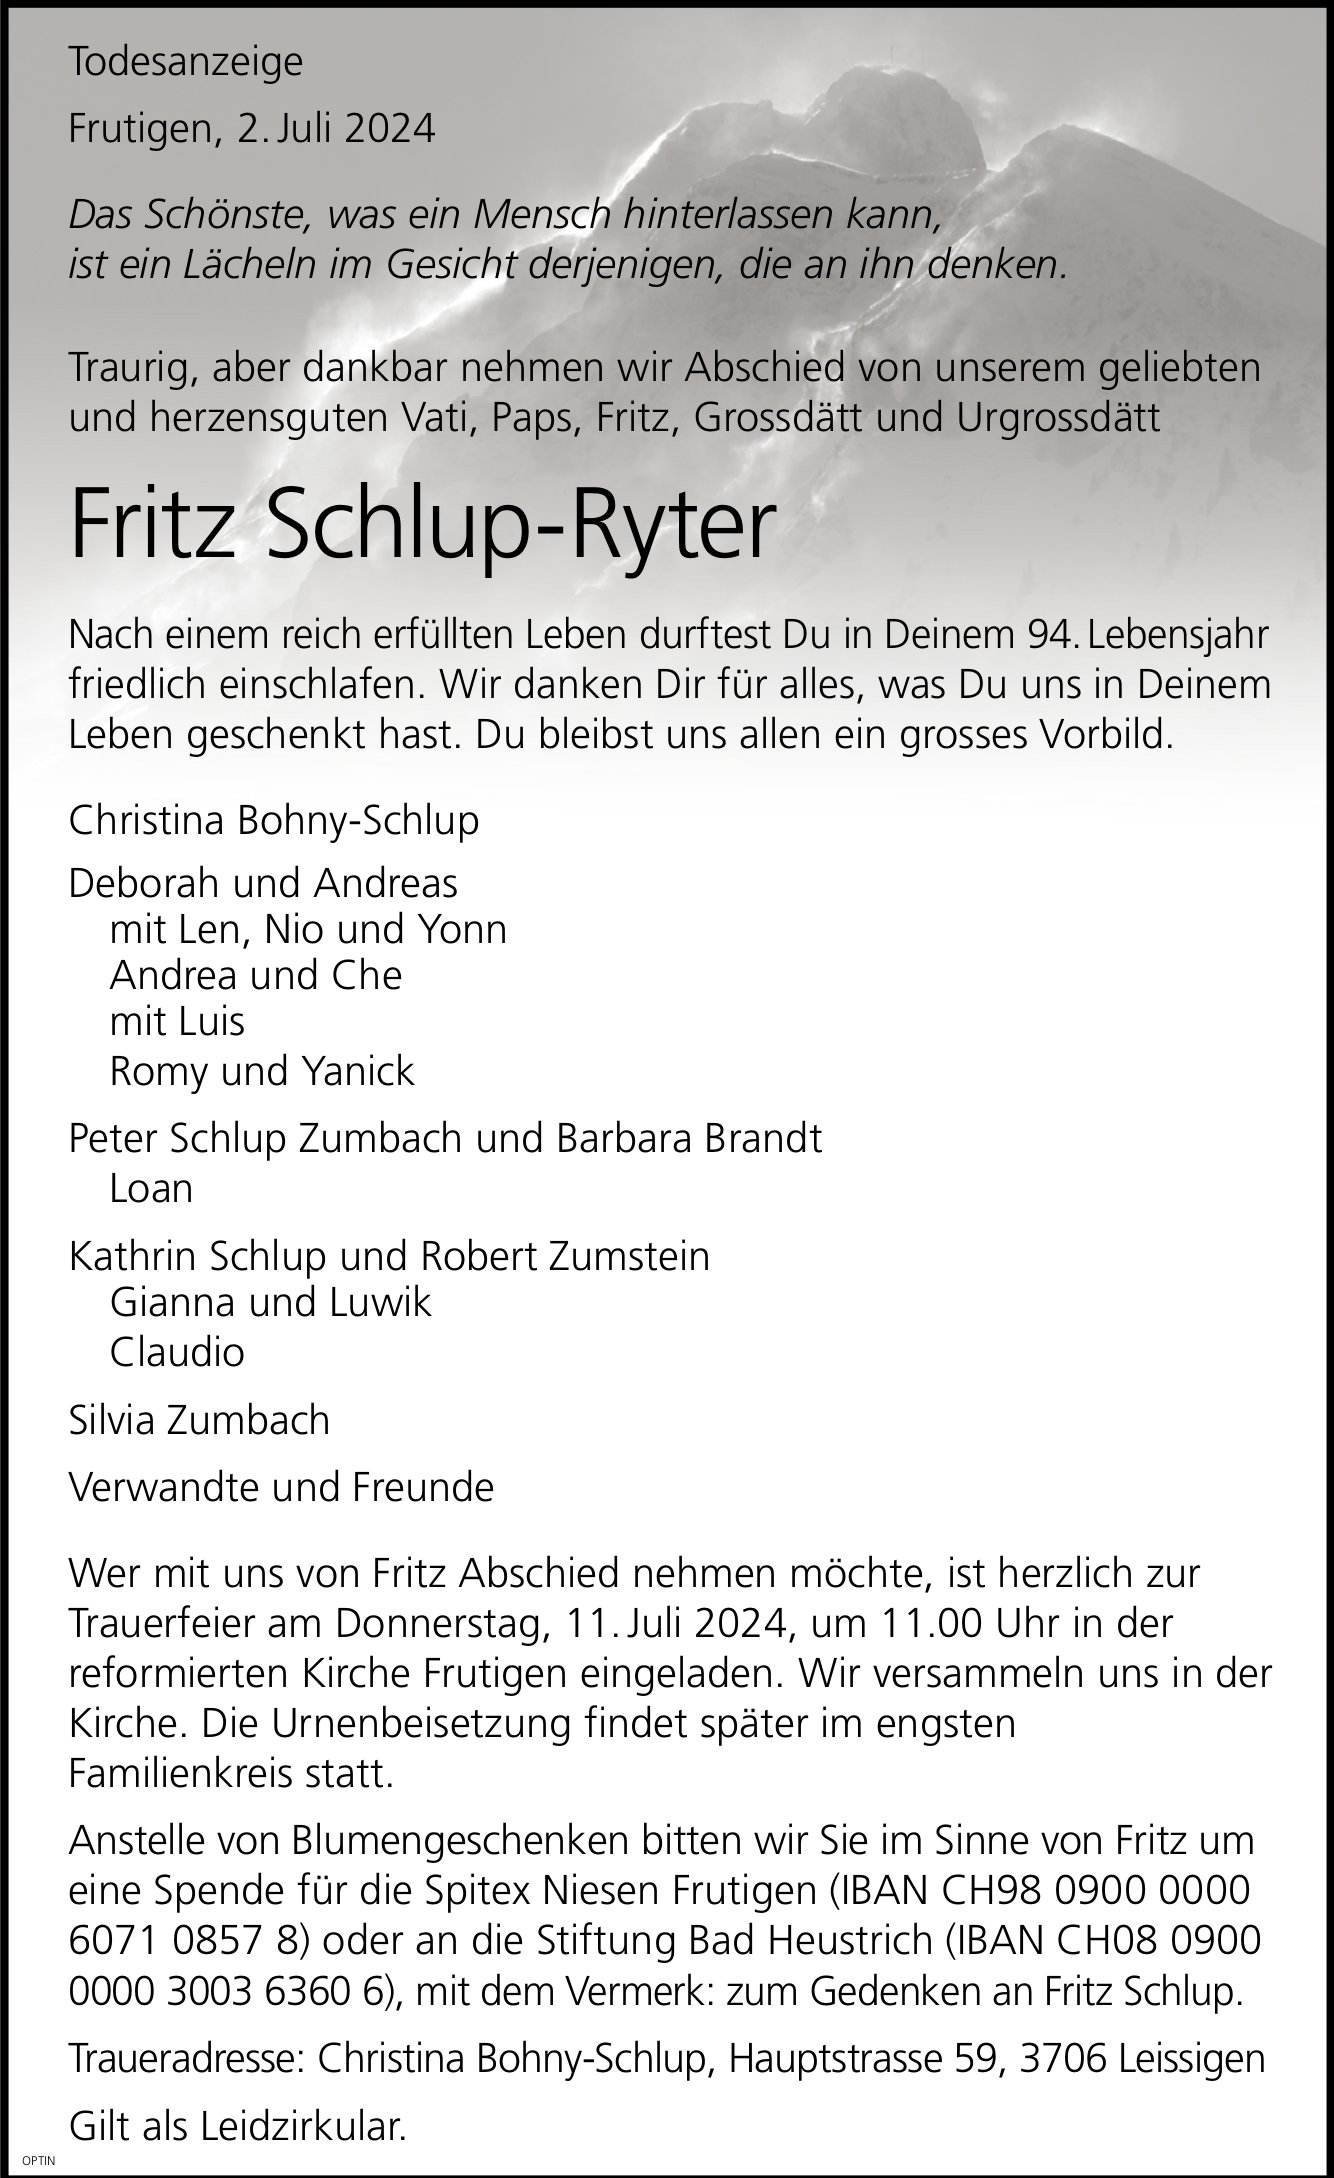 Fritz Schlup-Ryter, Juli 2024 / TA